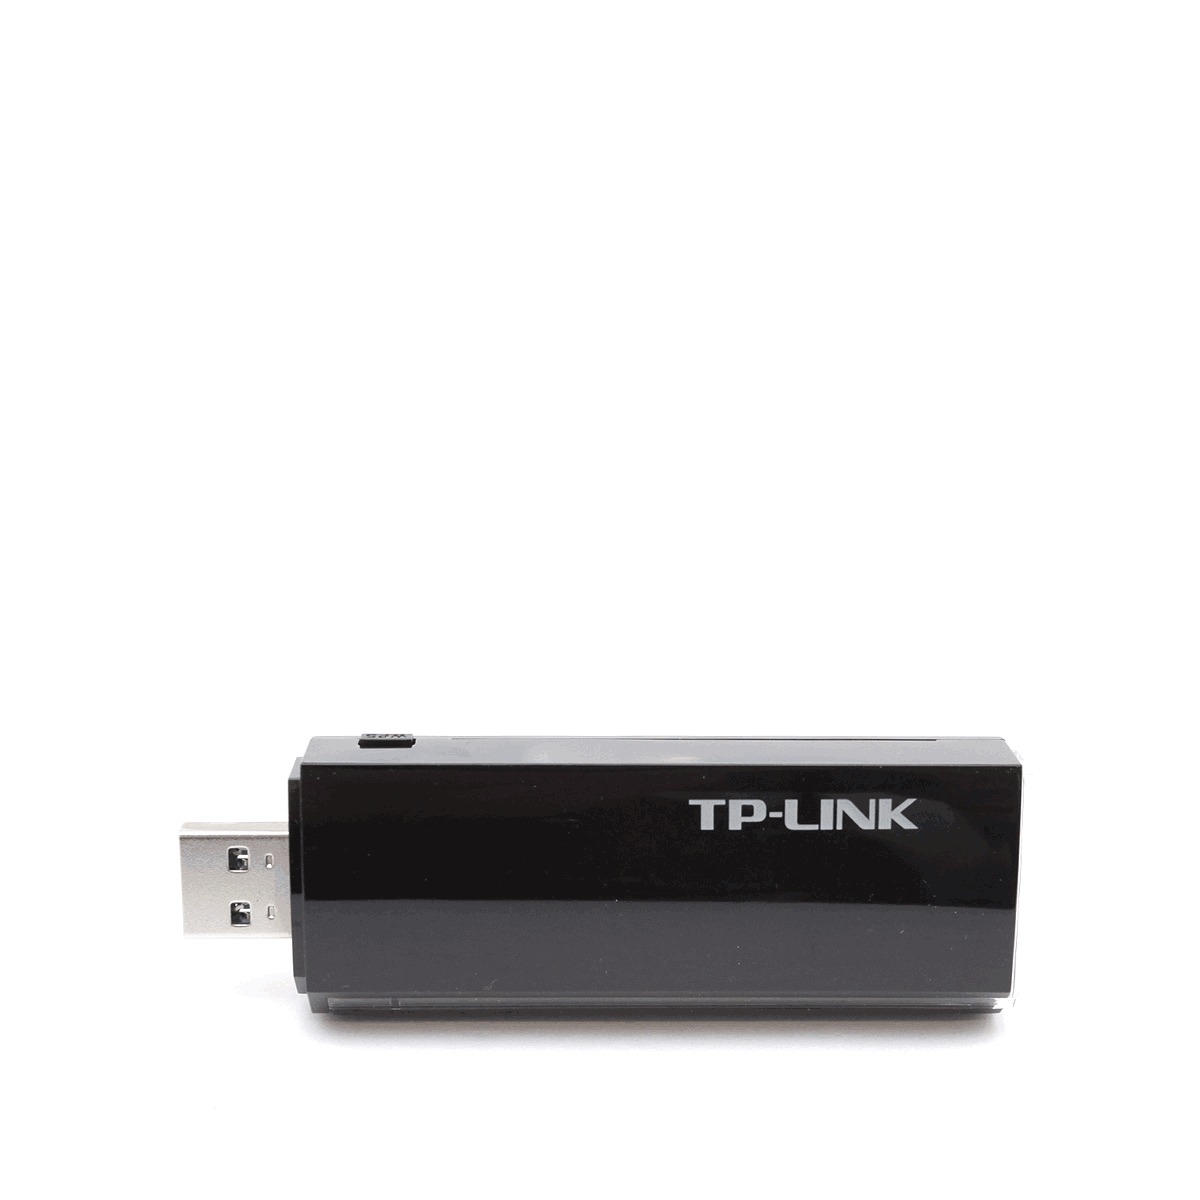 Adaptador WiFi USB Inalámbrico TP-Link Archer T4U / Doble banda / Negro